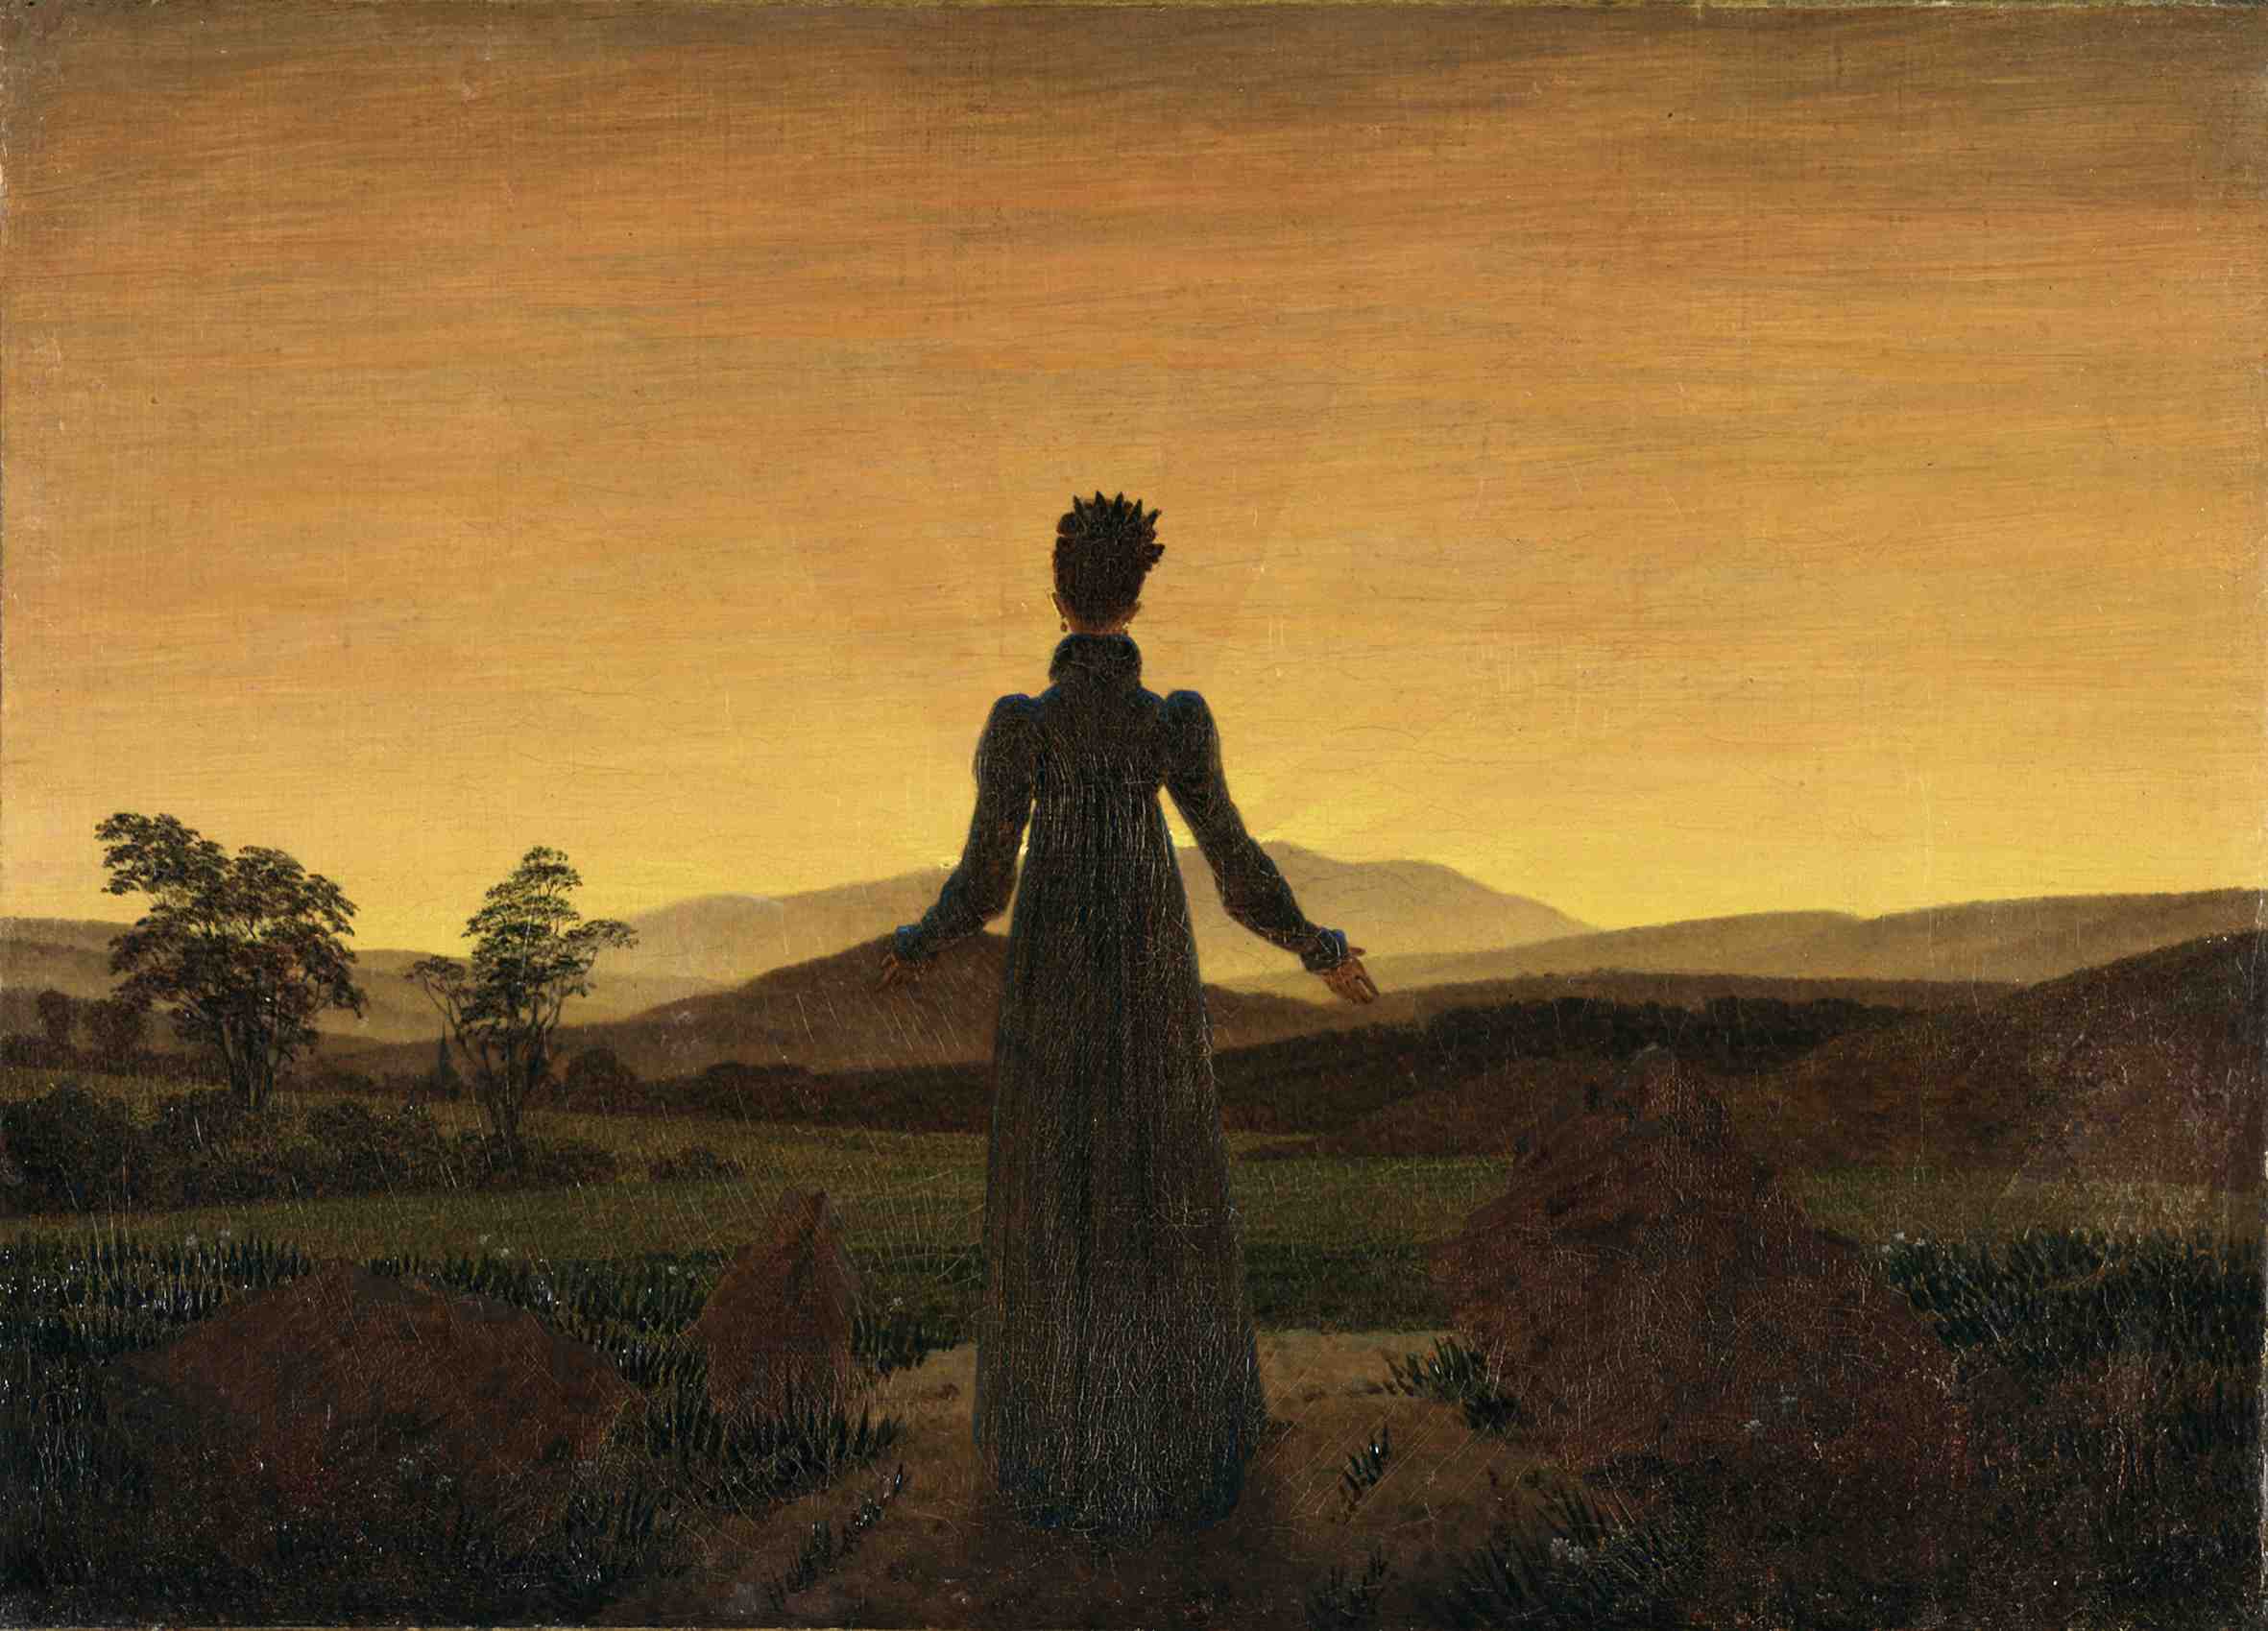 Woman before the Rising Sun by Caspar David Friedrich - c. 1818 - 22 × 30 cm Museum Folkwang